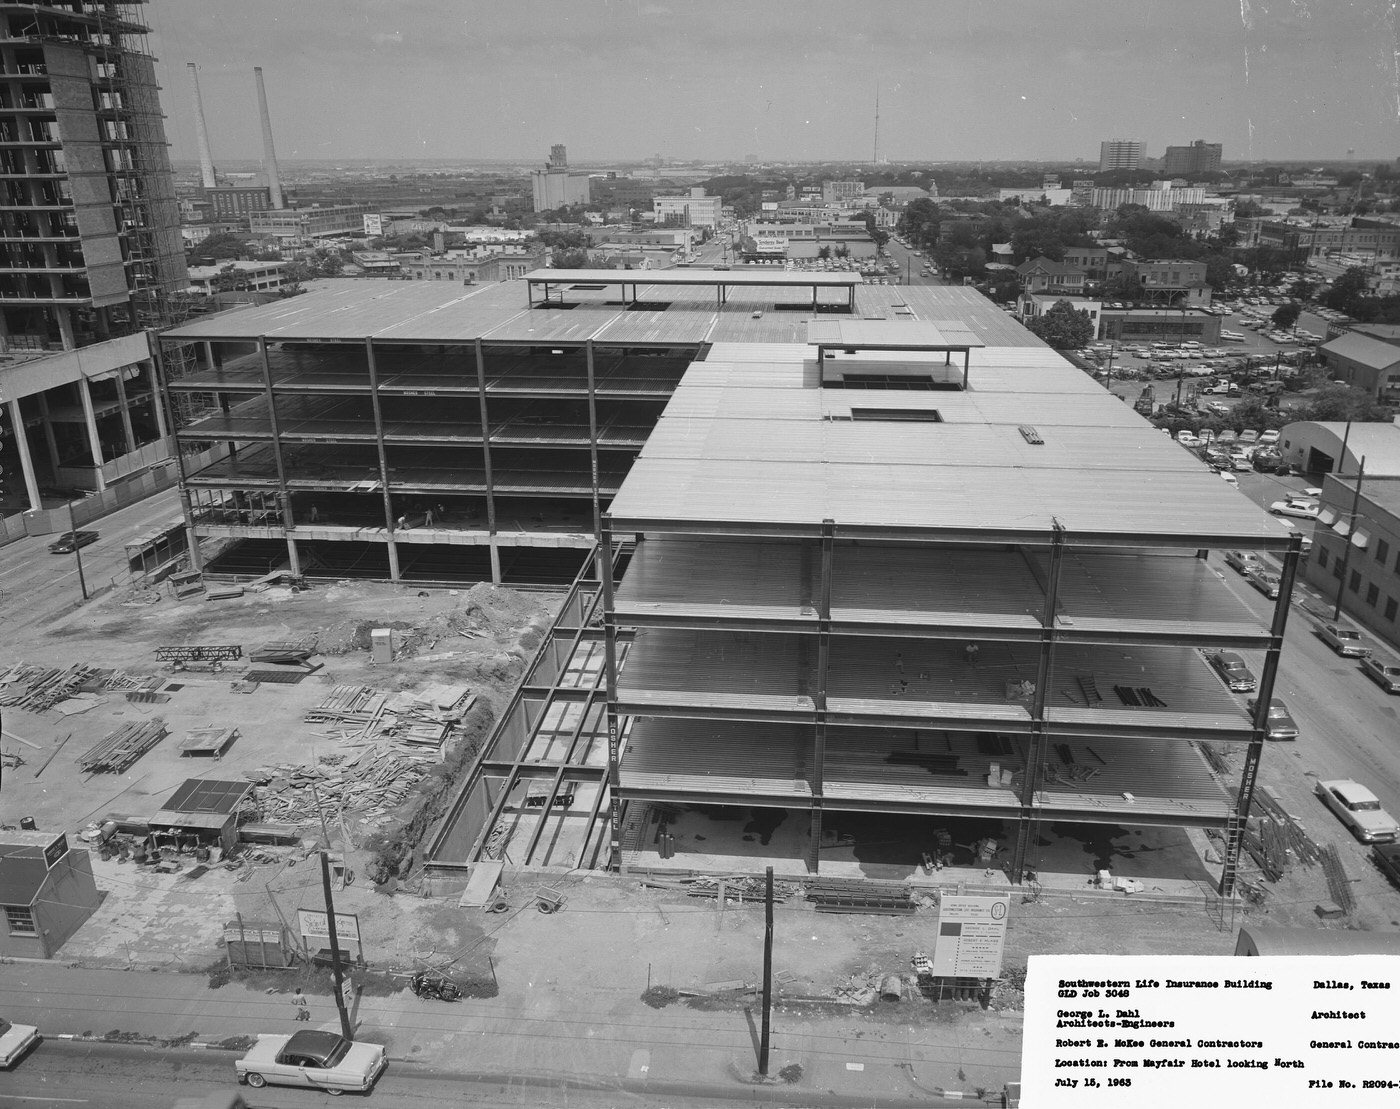 Southwestern Life Insurance building under construction, downtown Dallas, Texas.1963